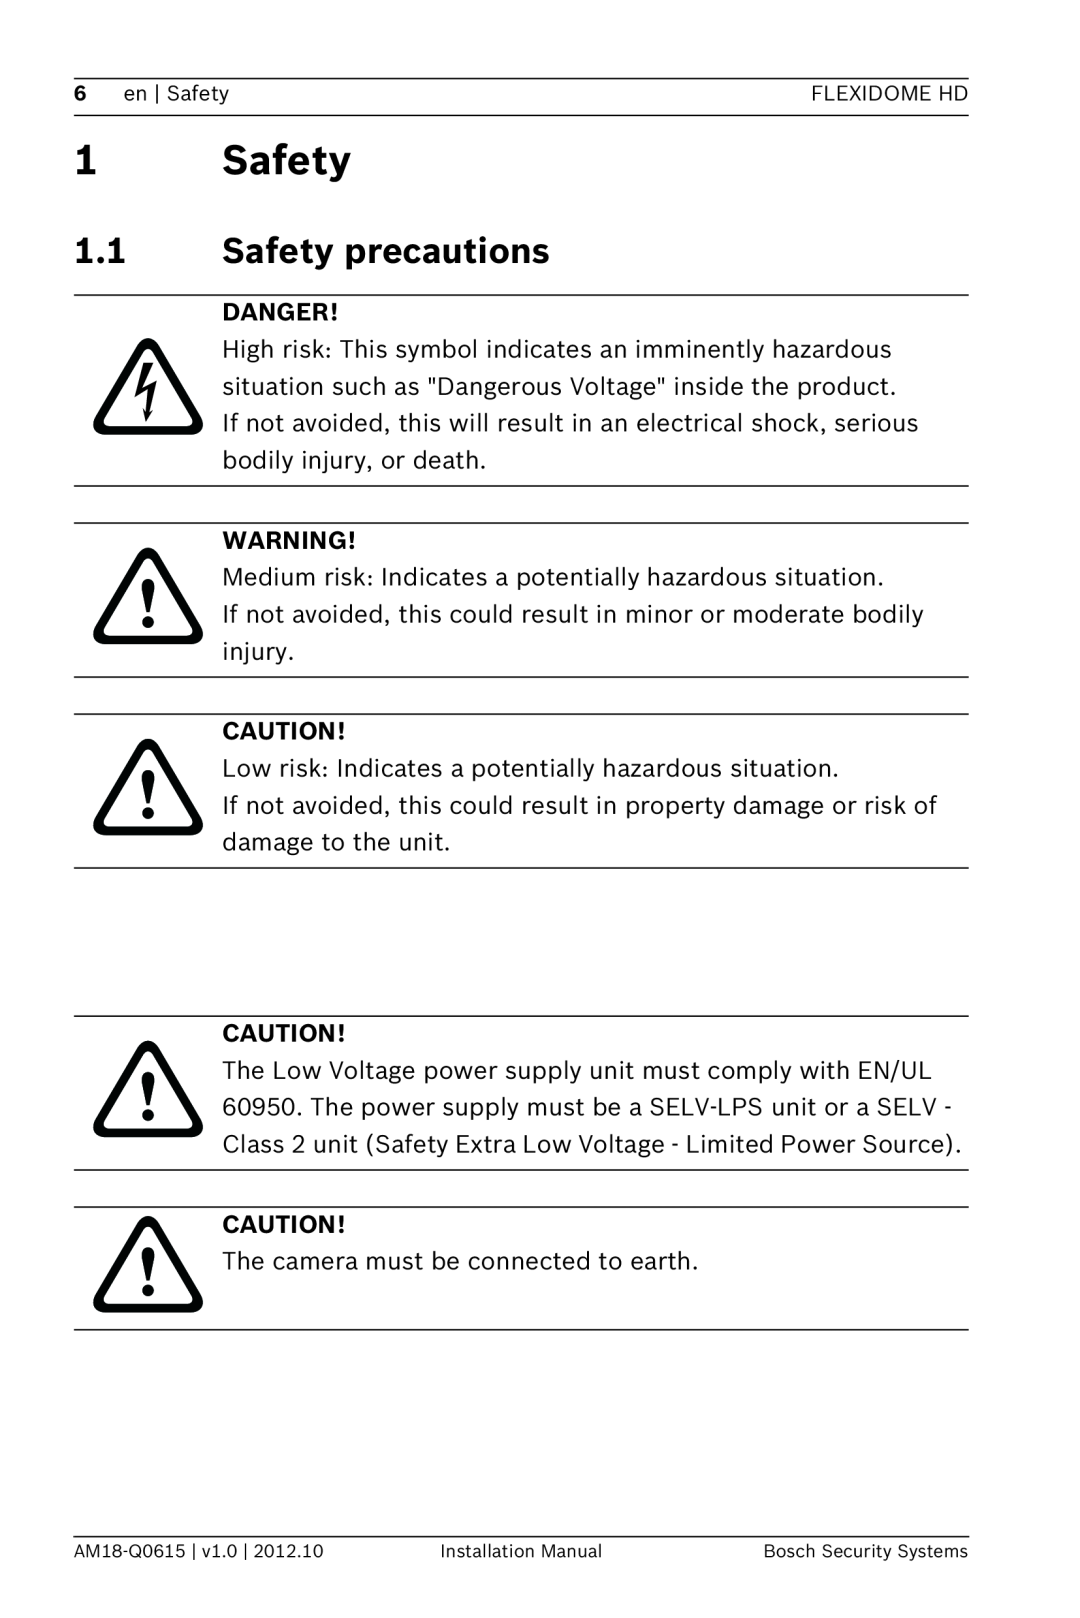 Bosch Appliances NDN-733 installation manual 1.1Safety precautions, Danger 